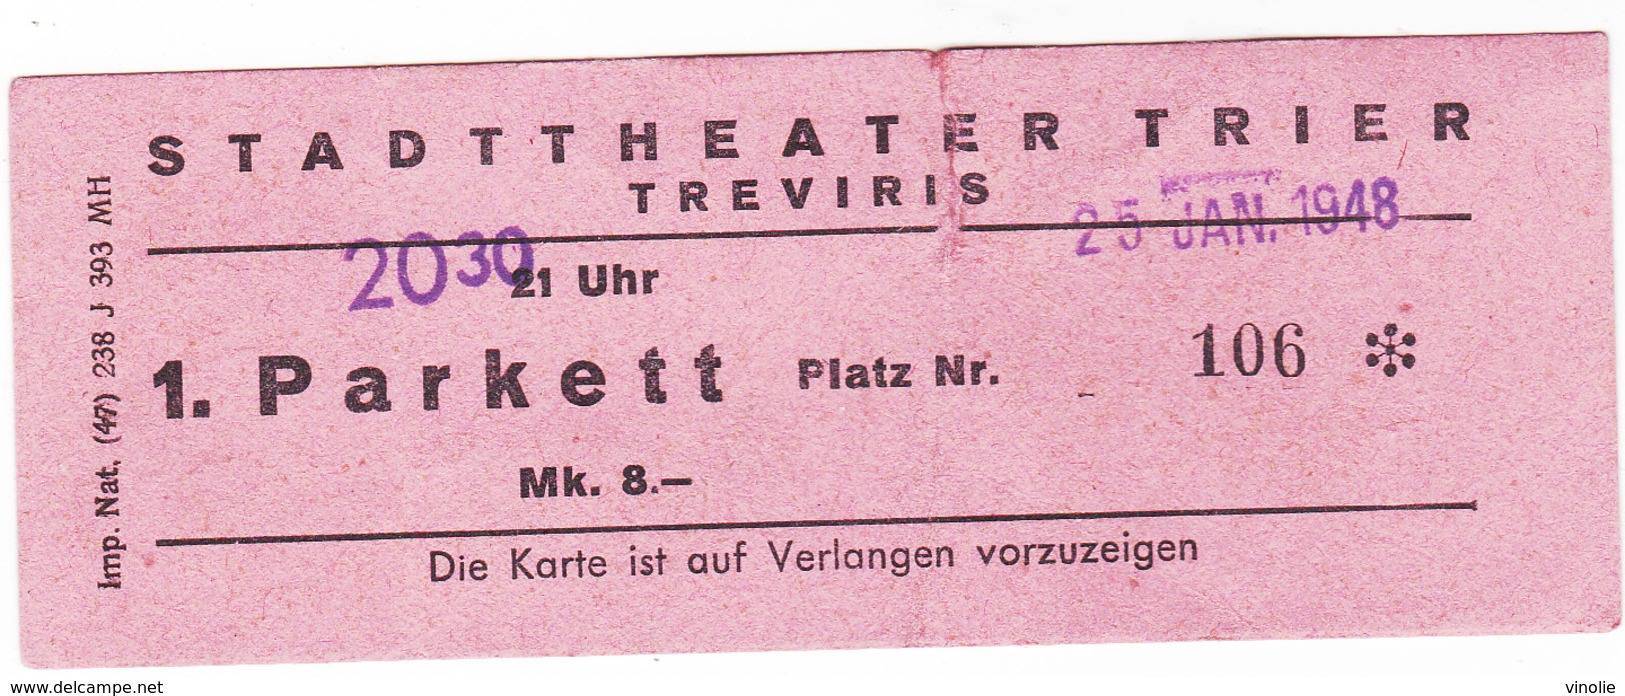 PIE-VPT-18-018 :  TICKET. STADTTHEATER TRIER. TREVIRIS. 25 JANVIER 1948. - Tickets D'entrée